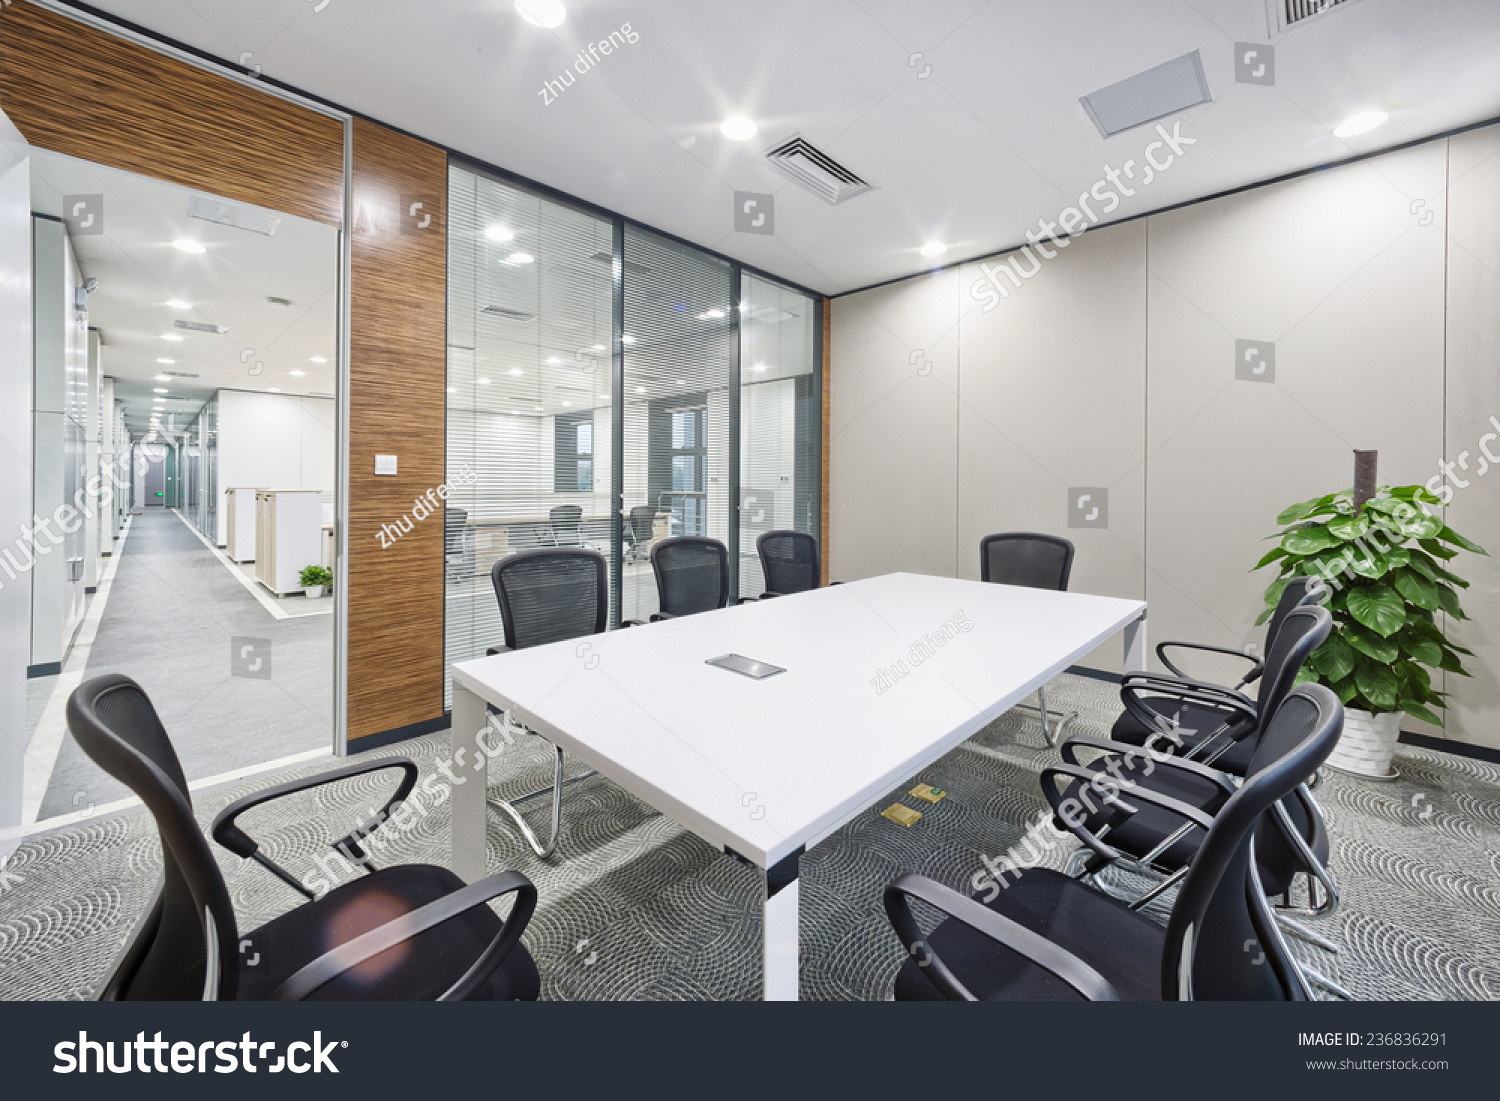 Modern Office Meeting Room Interior Stockfoto Jetzt